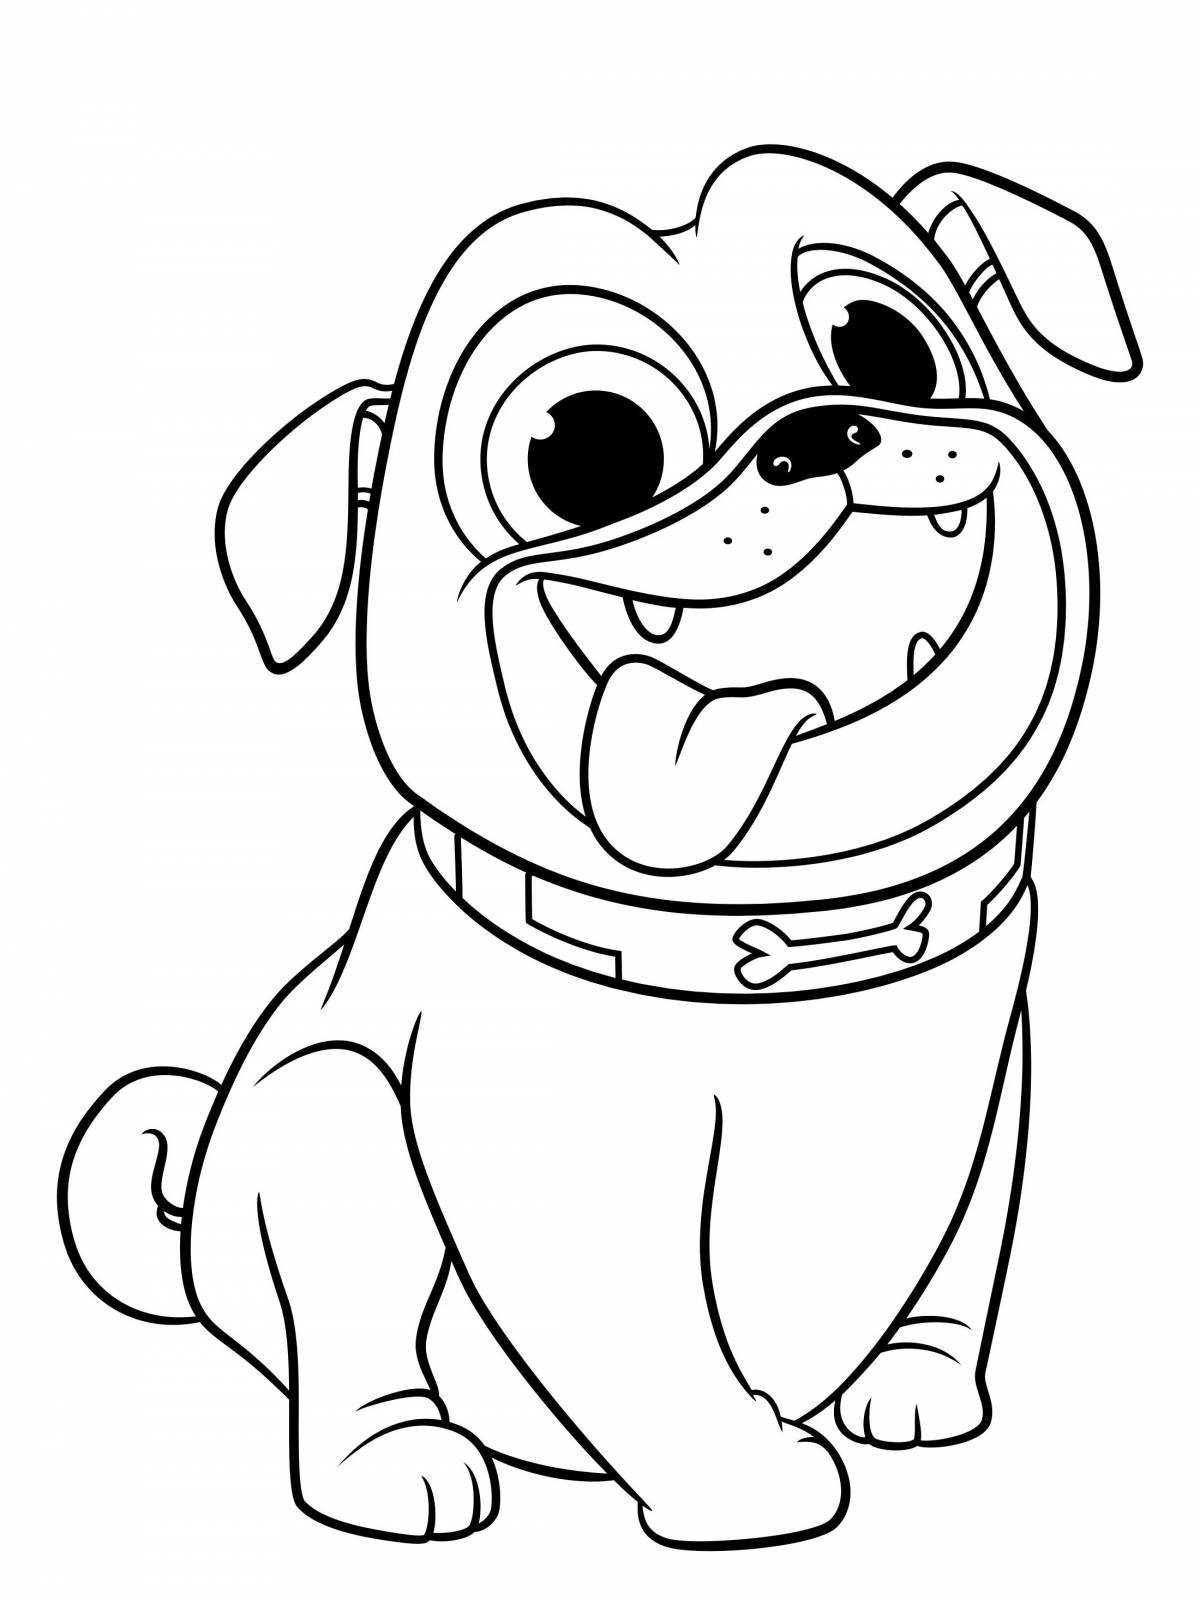 Cartoon dog coloring page